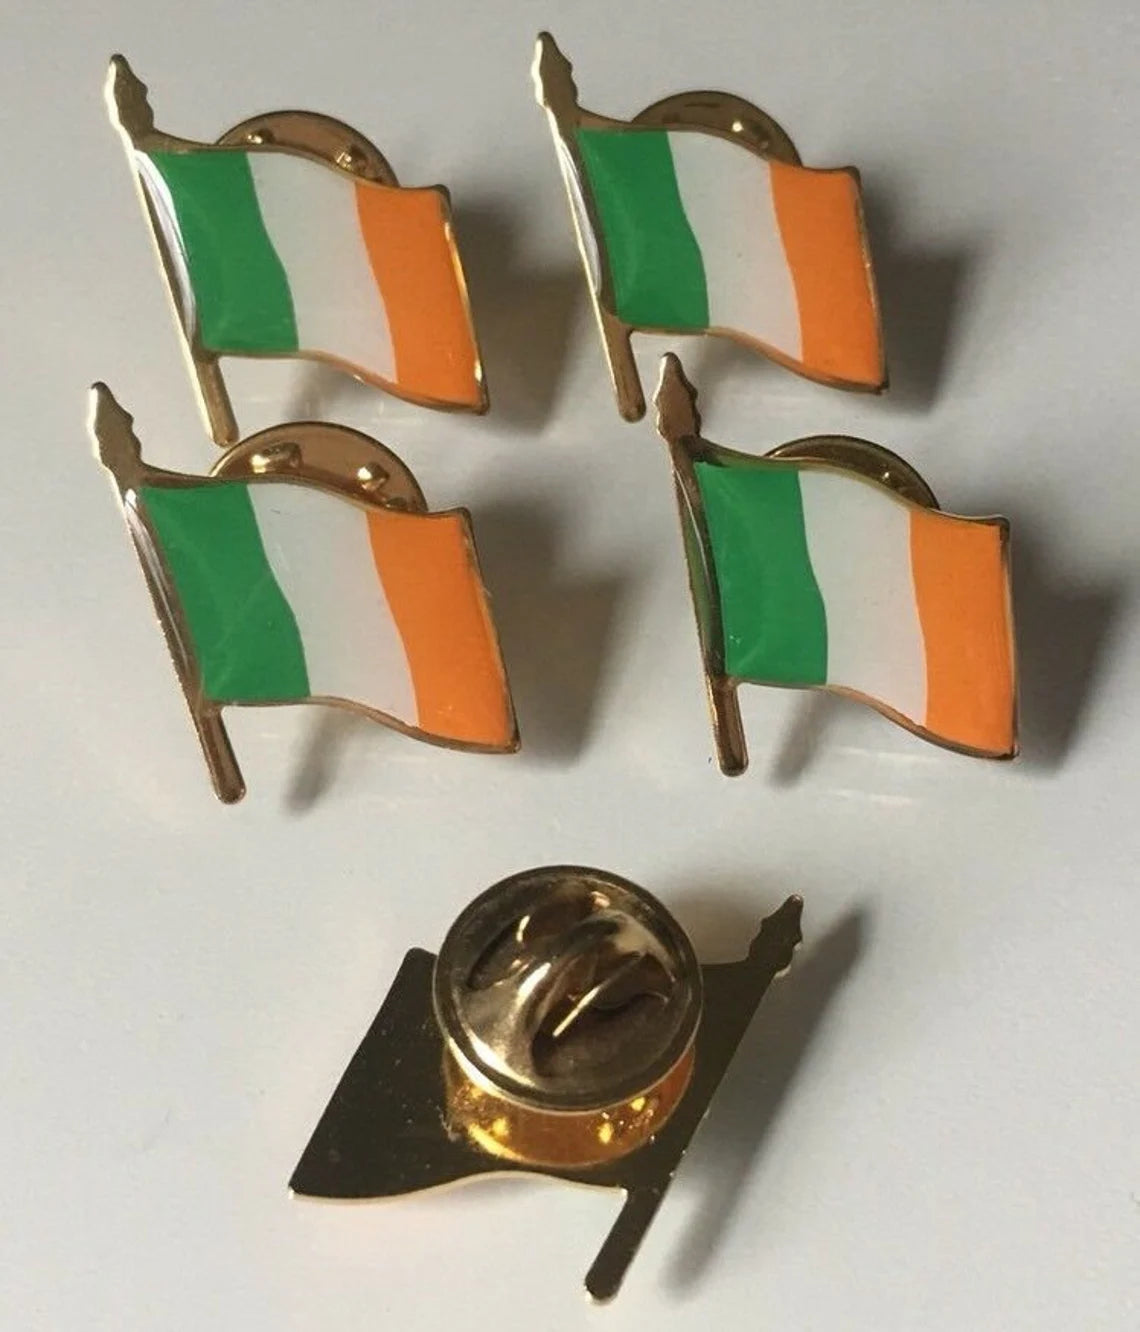 Republic of Ireland Flag Pin